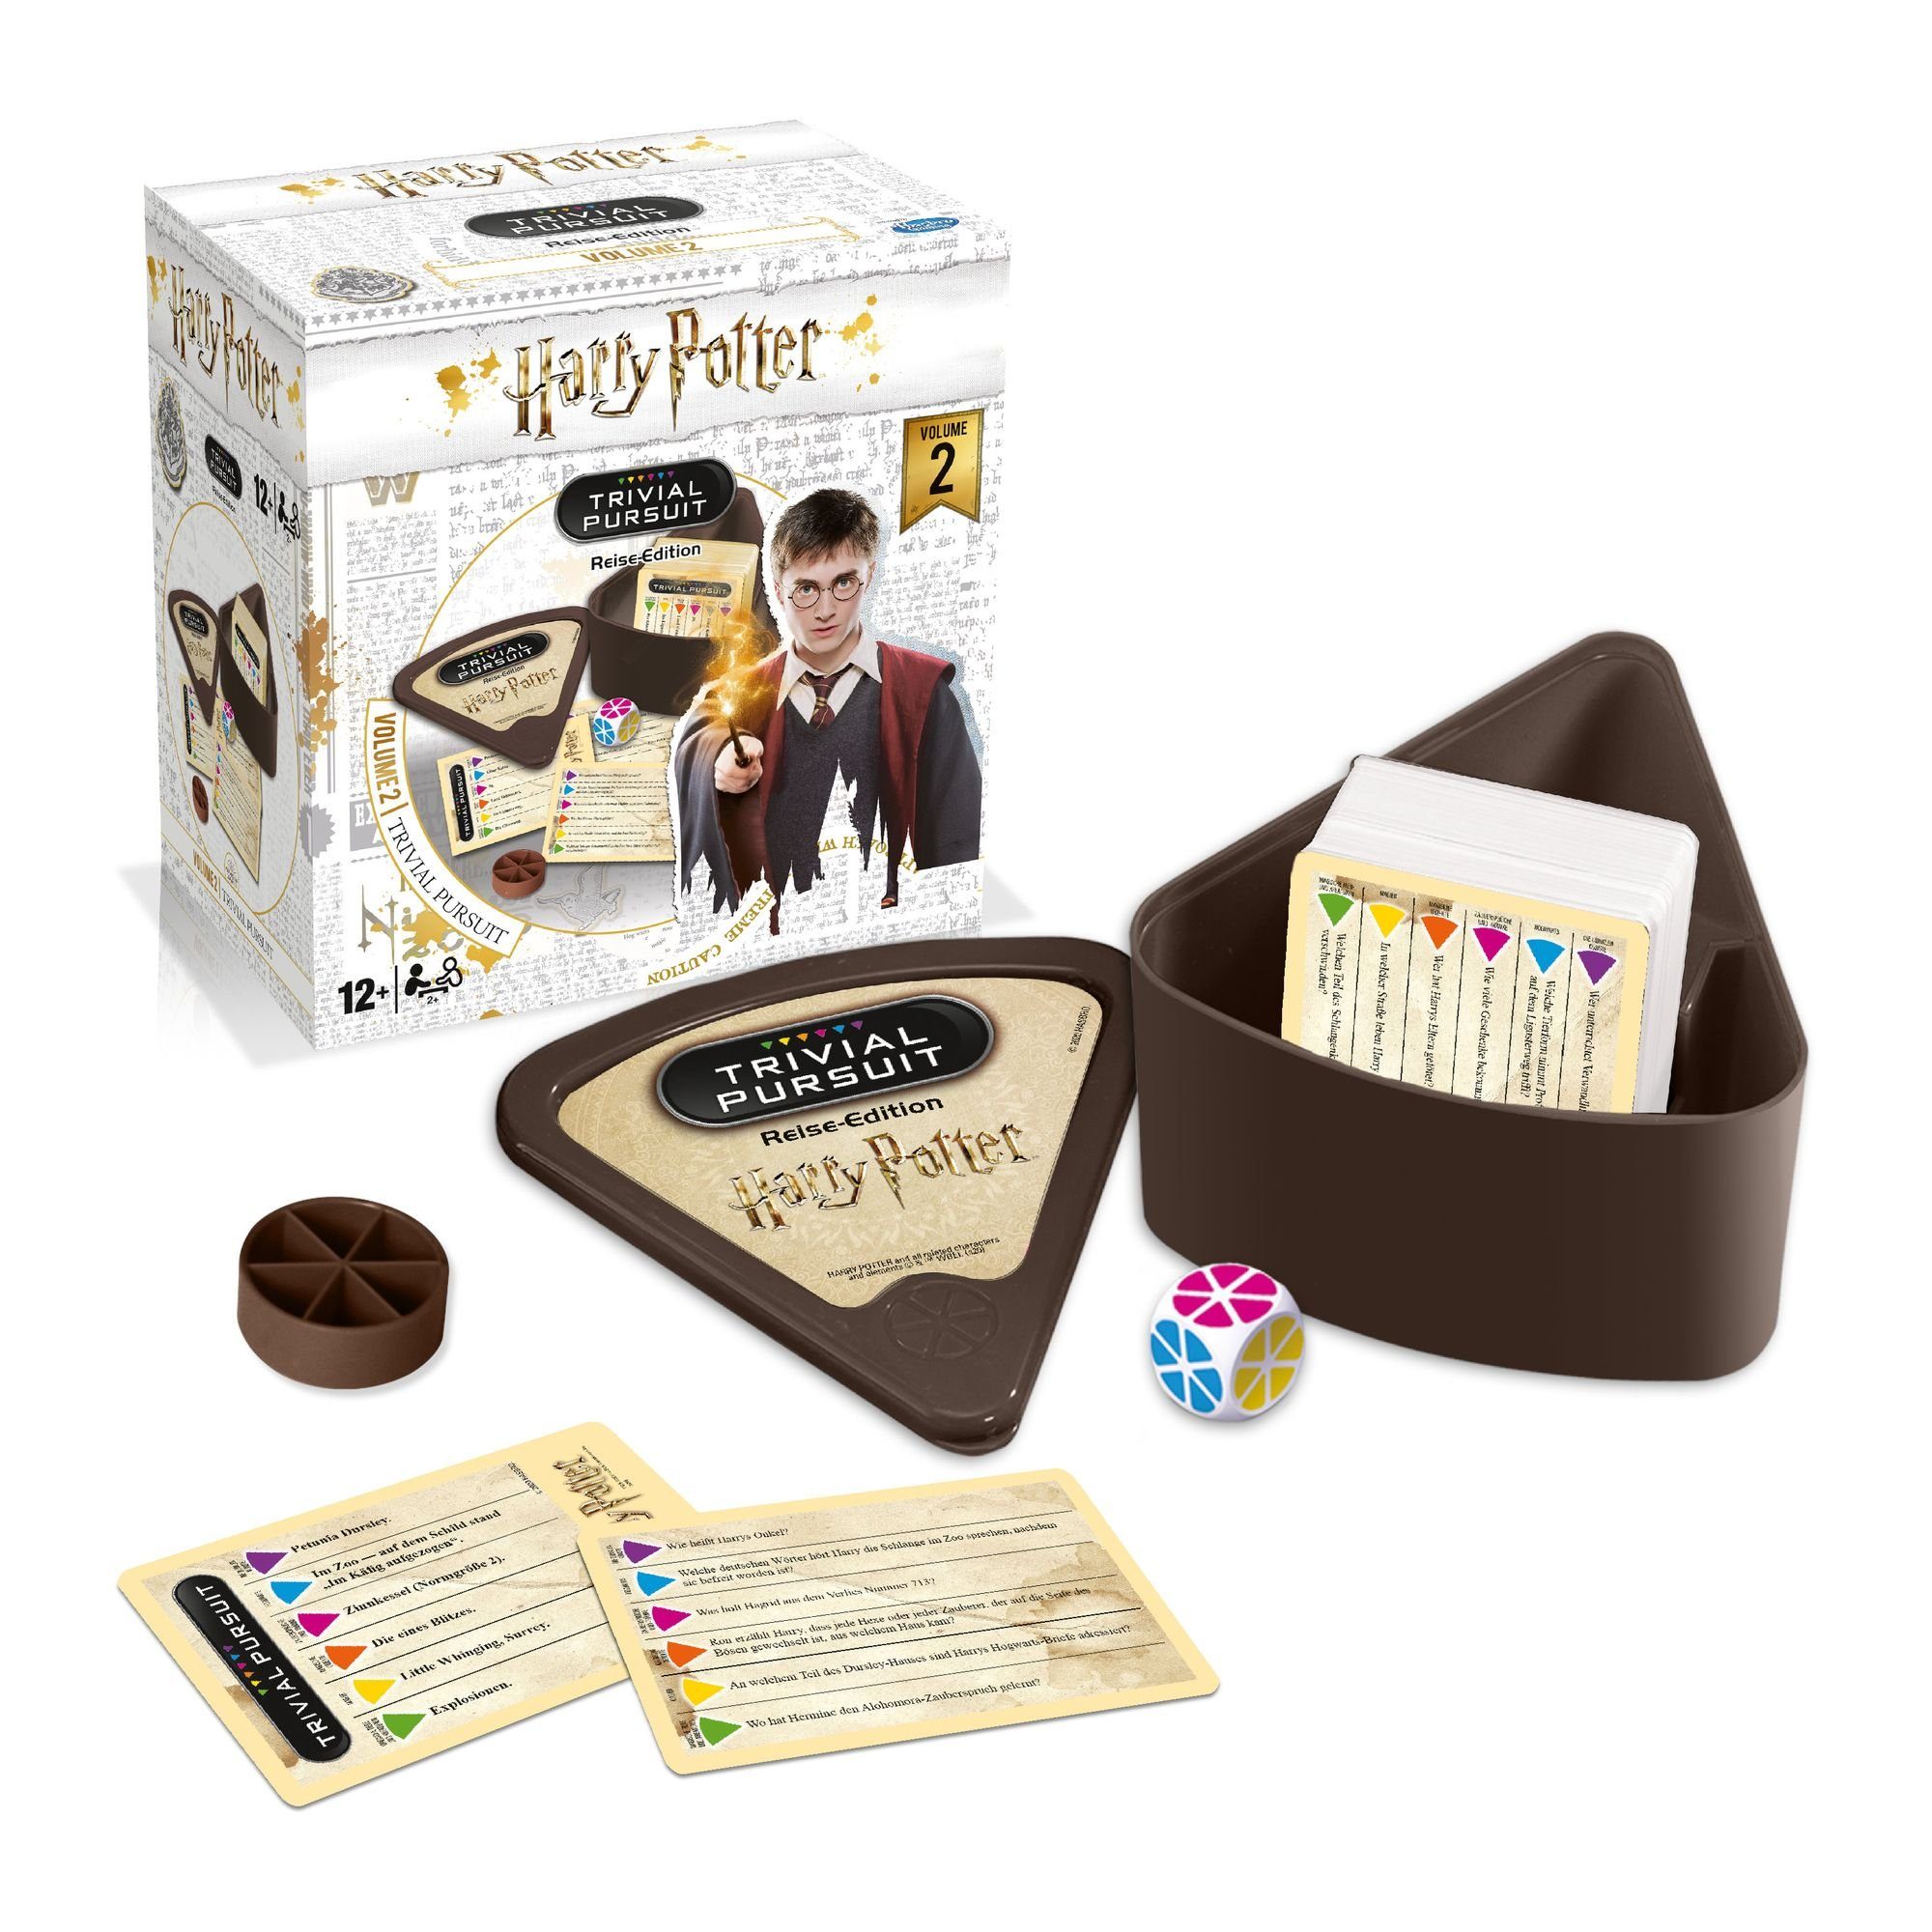 2 Trivial Wissenspiel Potter Spiel, Pursuit Winning Moves Harry Vol.